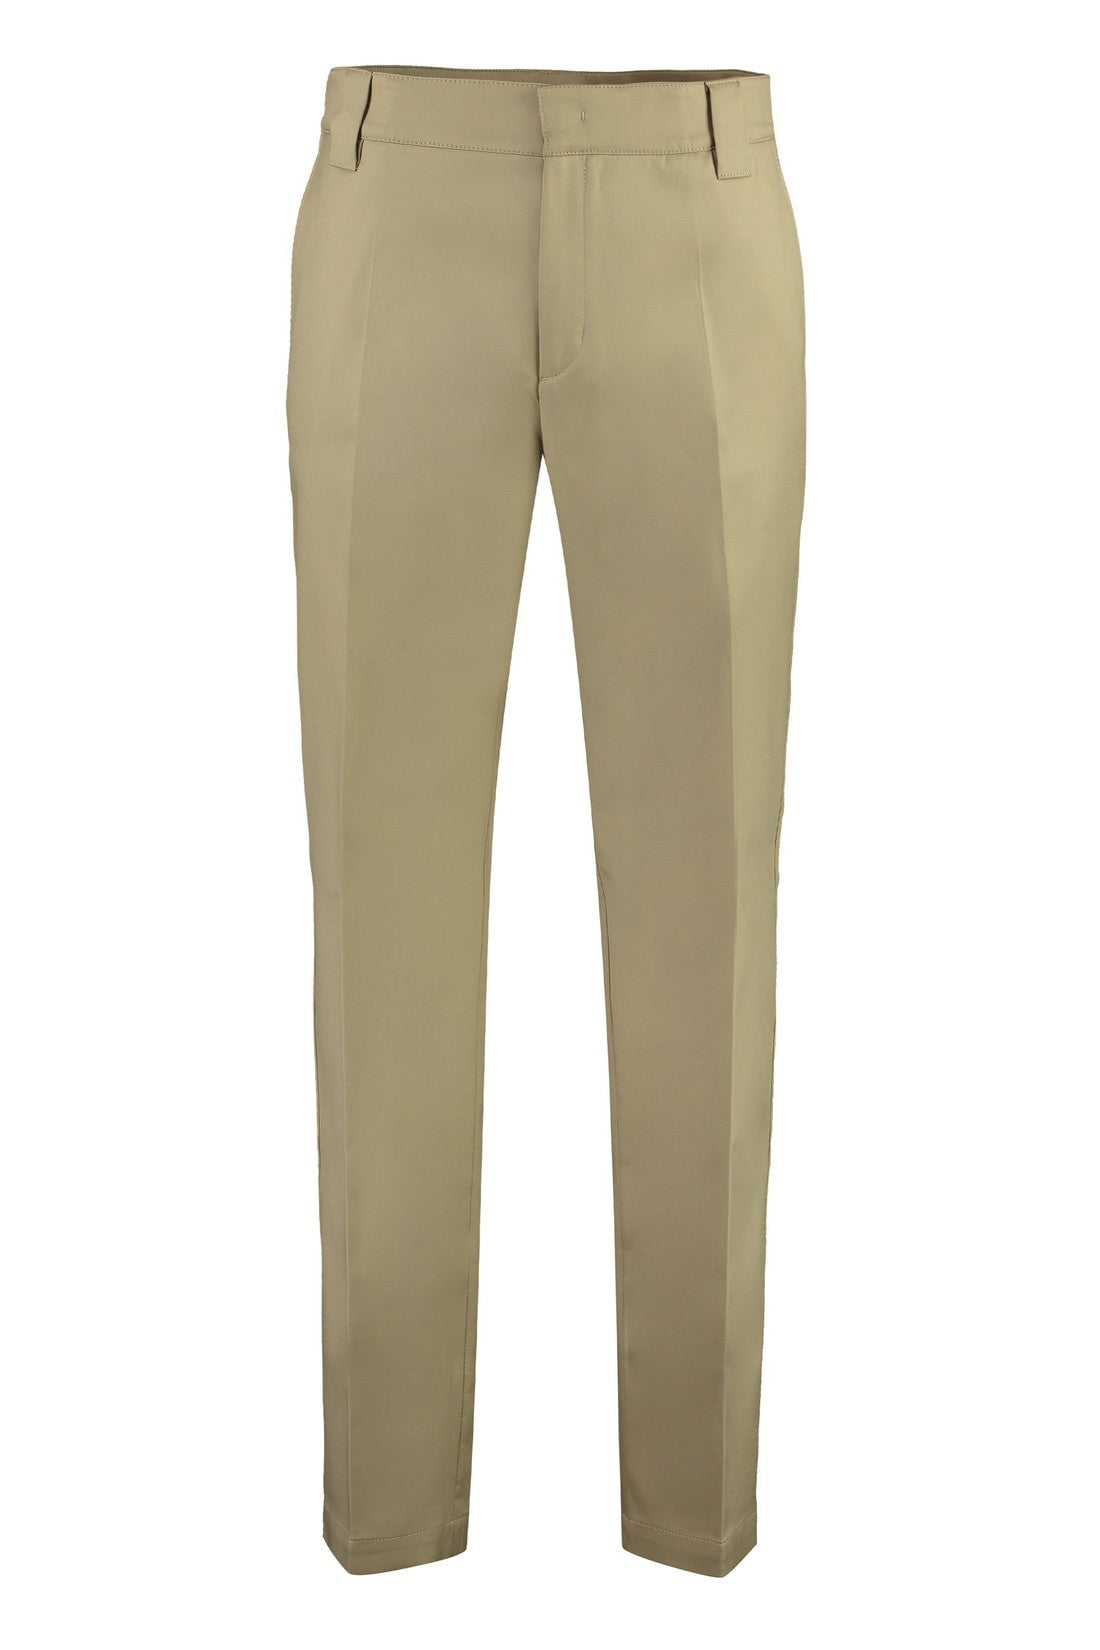 Valentino-OUTLET-SALE-Cotton gabardine trousers-ARCHIVIST